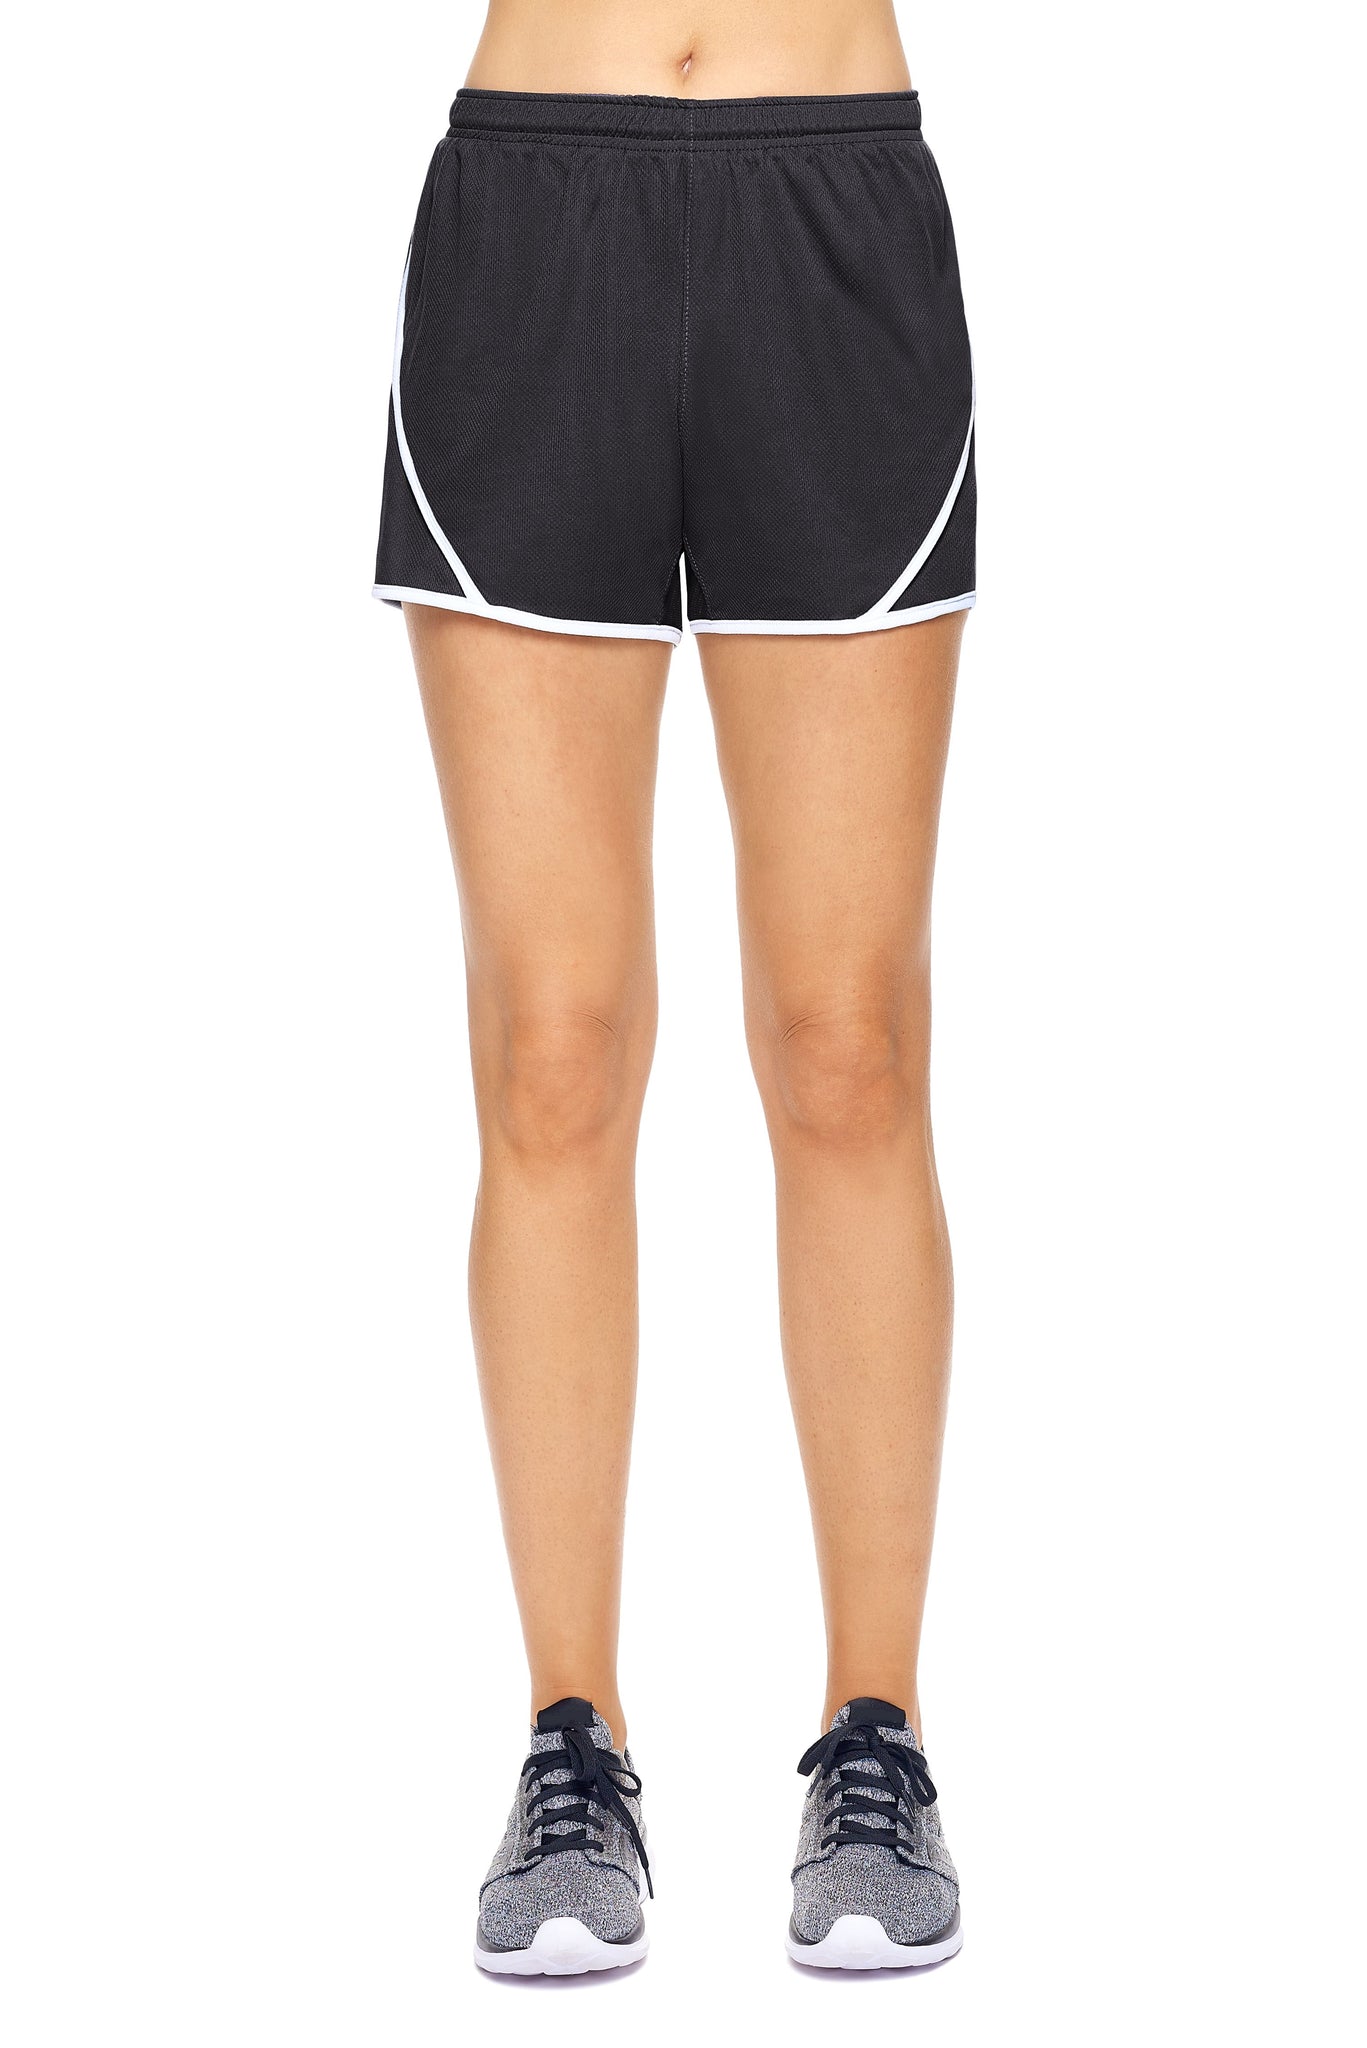 AJ1047🇺🇸 Oxymesh™ Energy Shorts - Expert Brand #BLACK